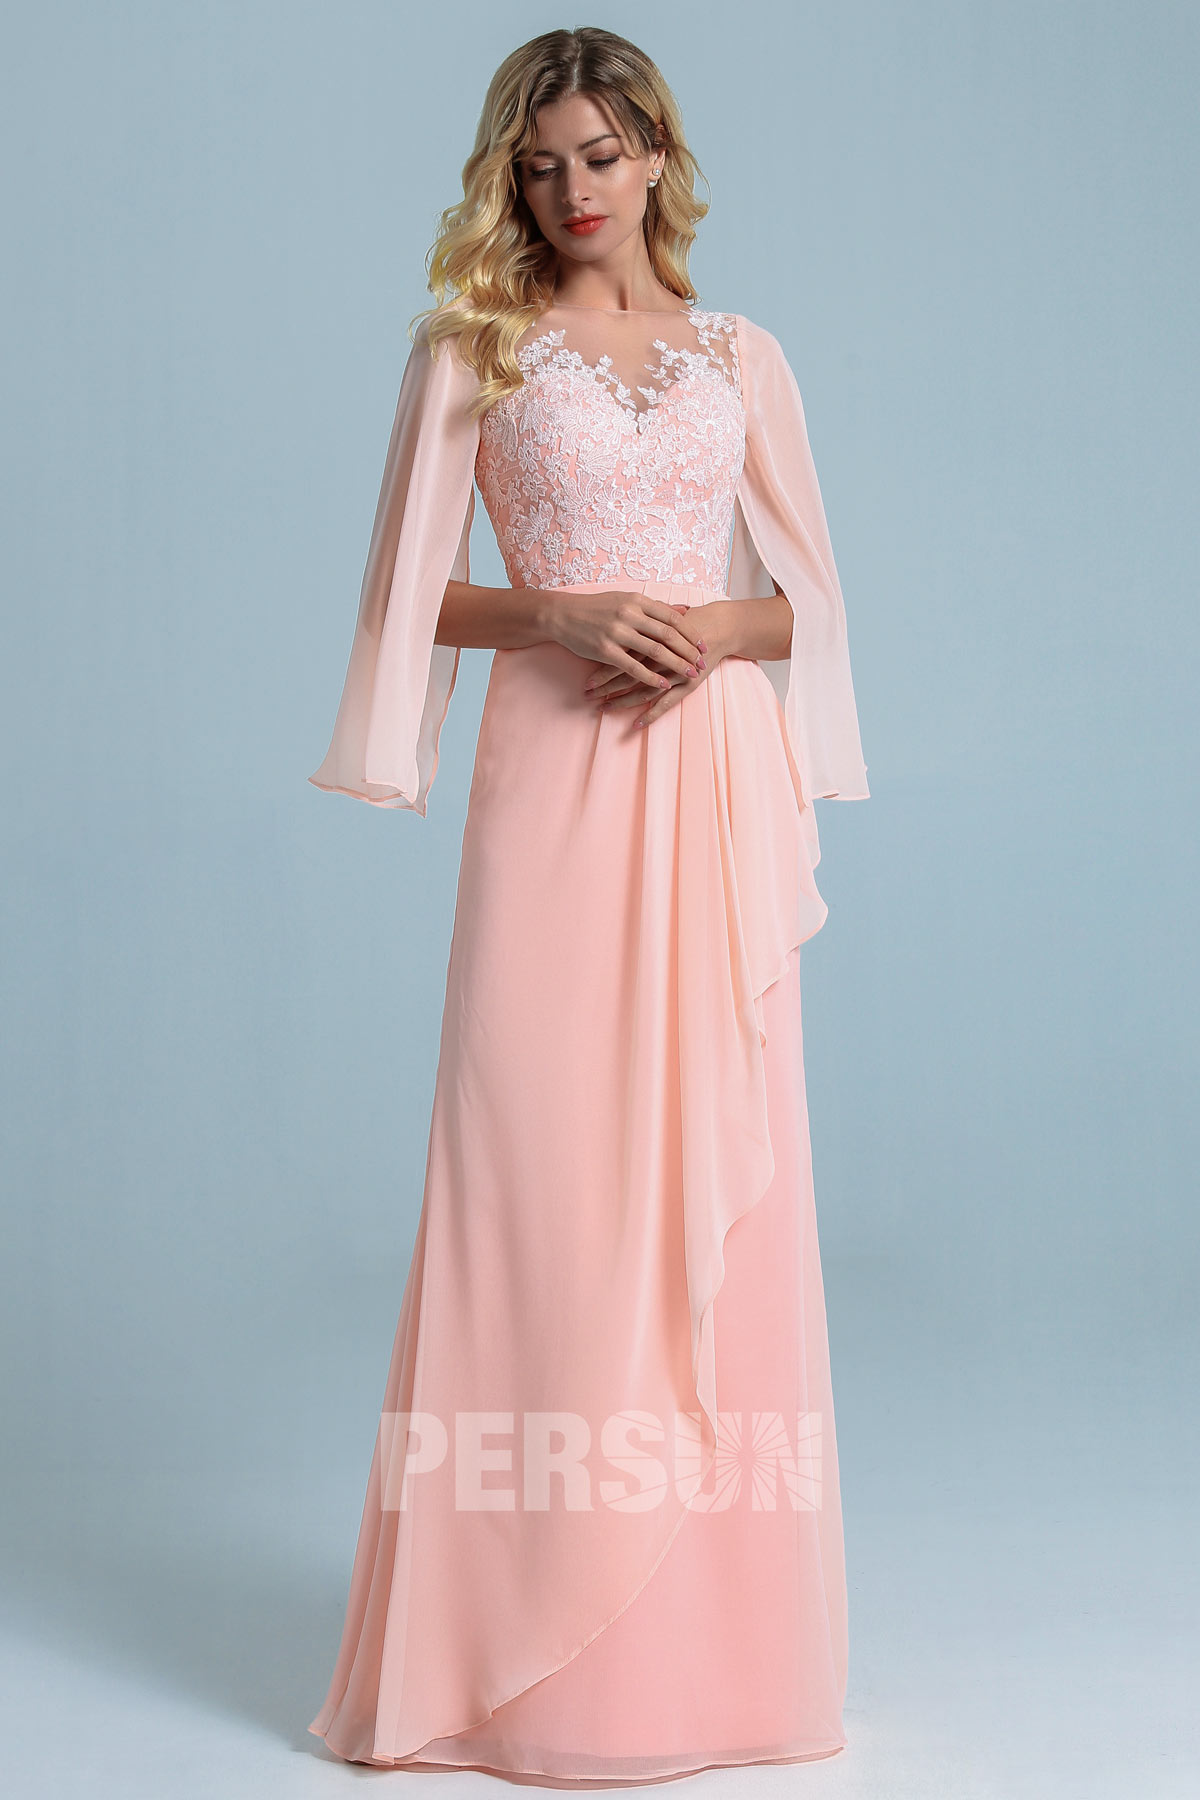 elegante-robe-soiree-long-rose-pale-2020-persun.jpg?profile=RESIZE_584x